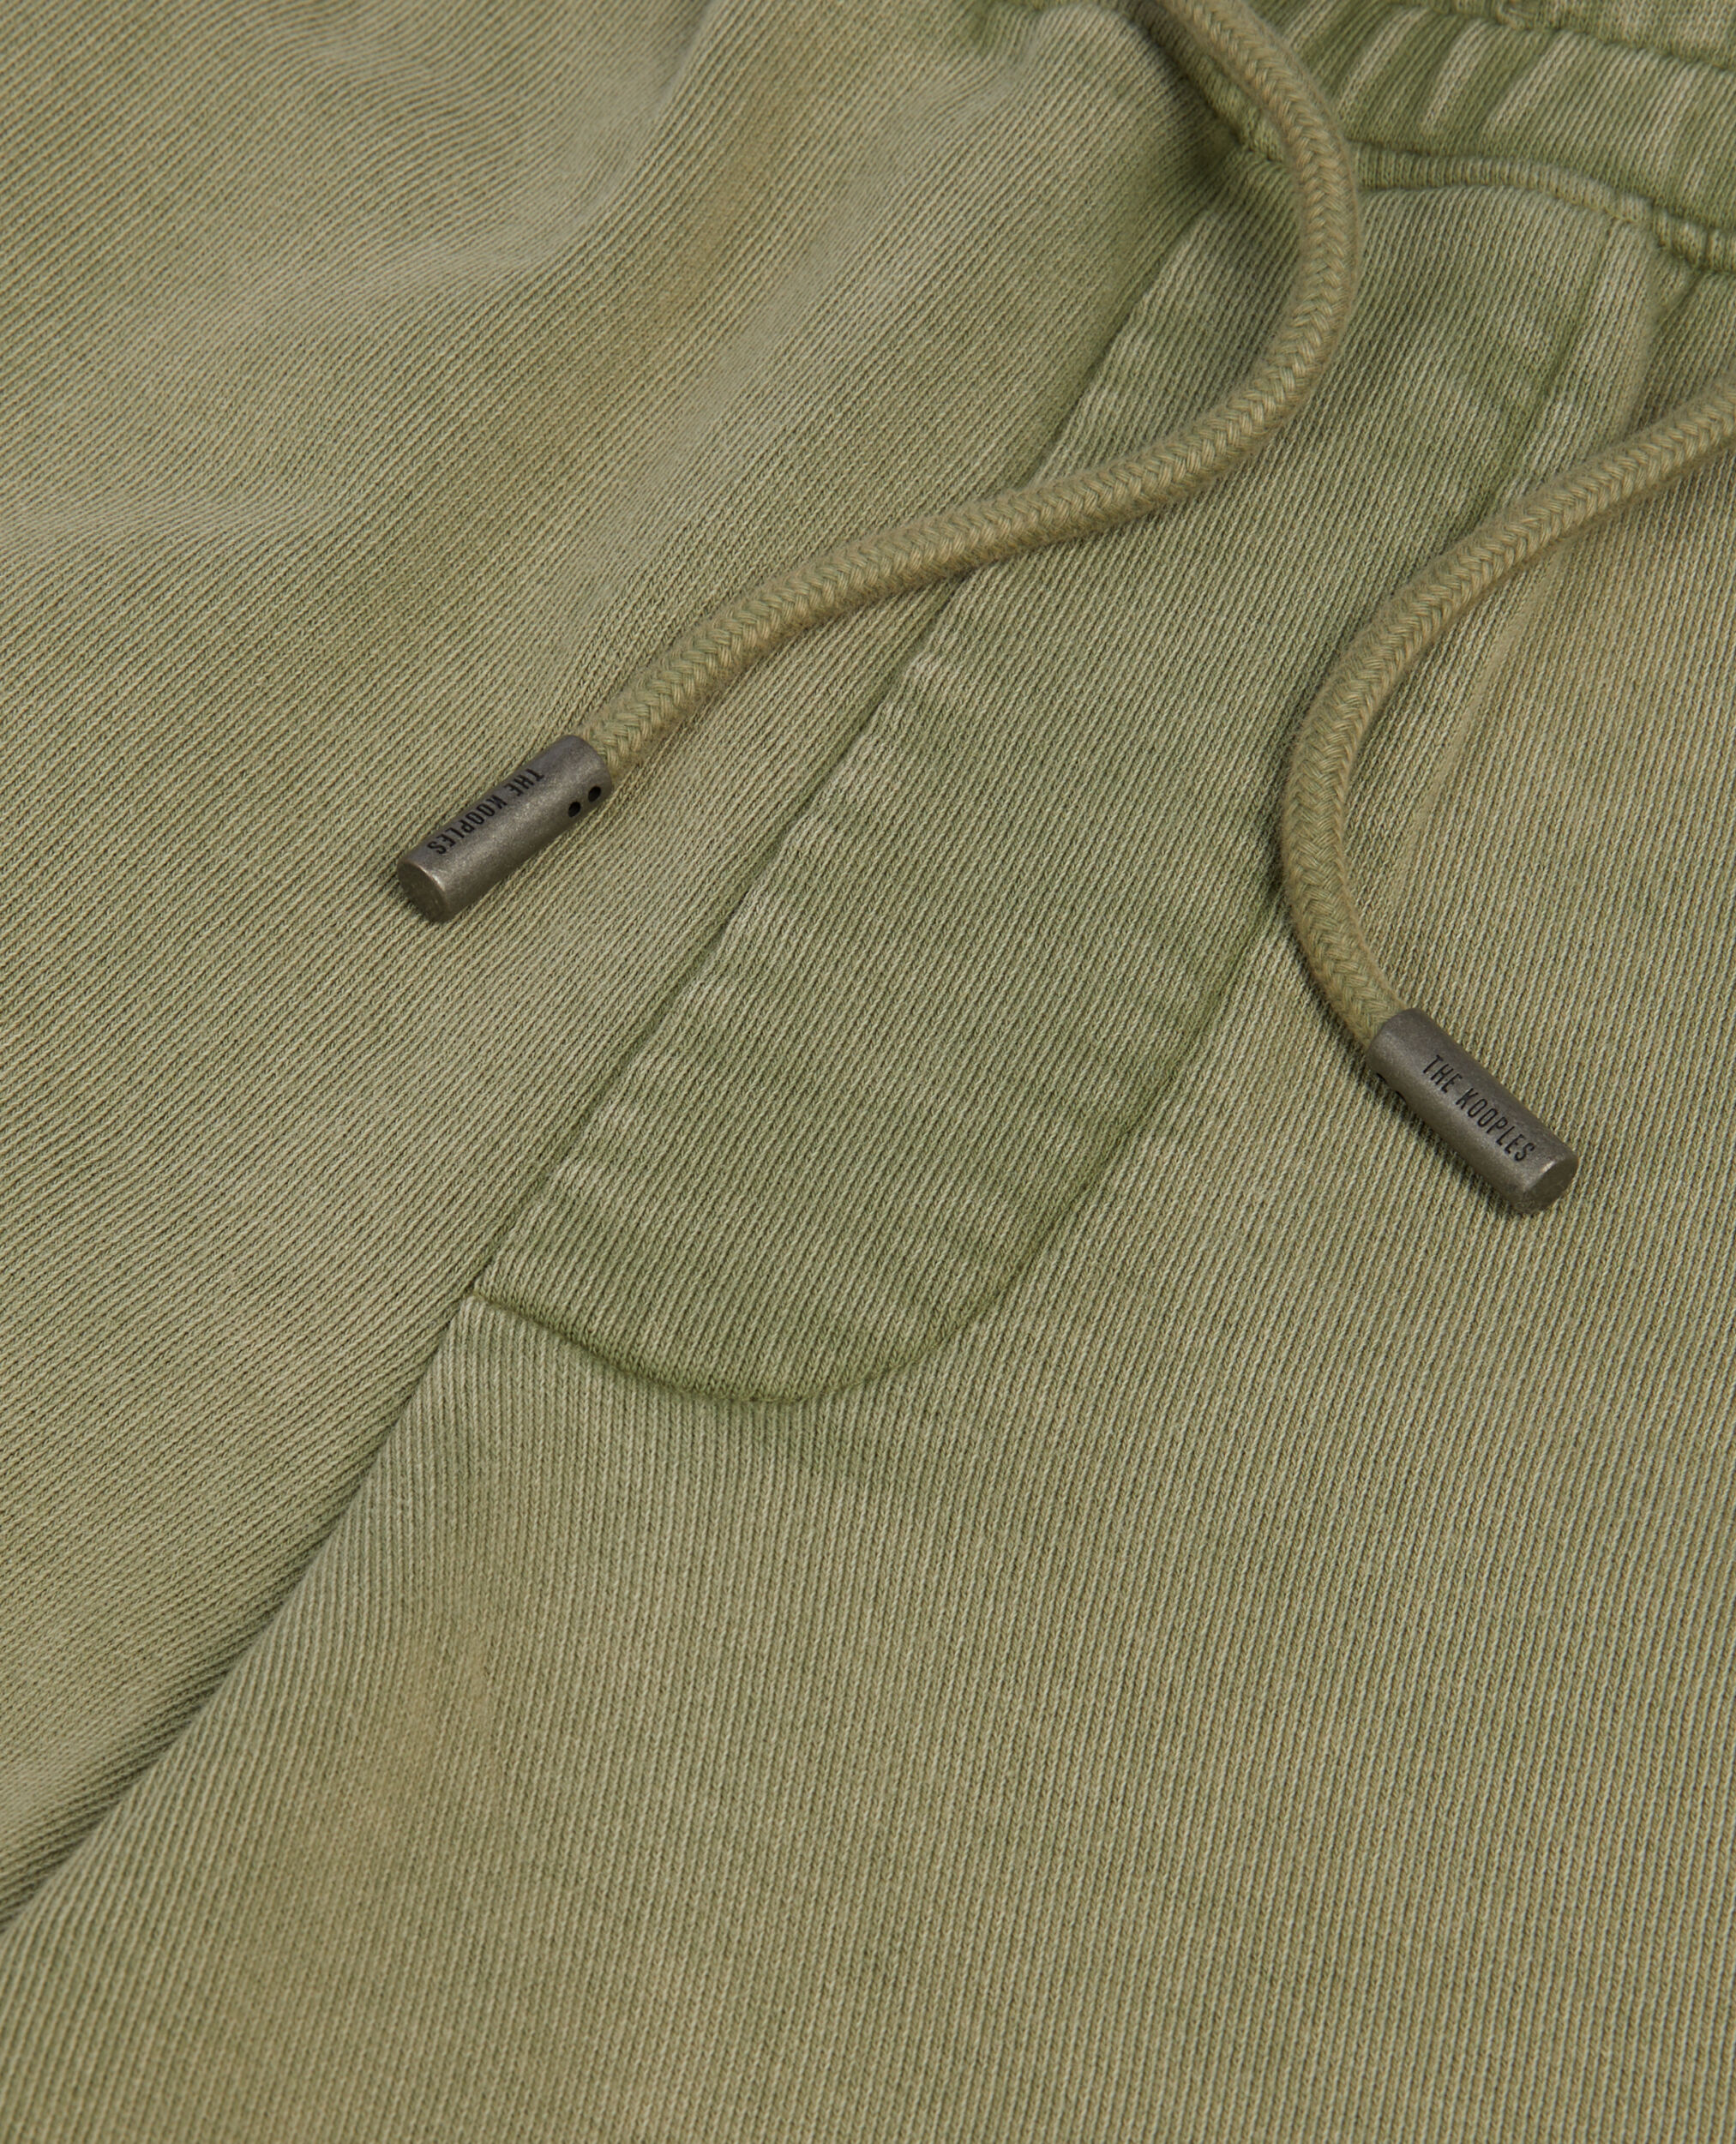 Hellgrüne Shorts aus Baumwolle, KAKI GREY, hi-res image number null